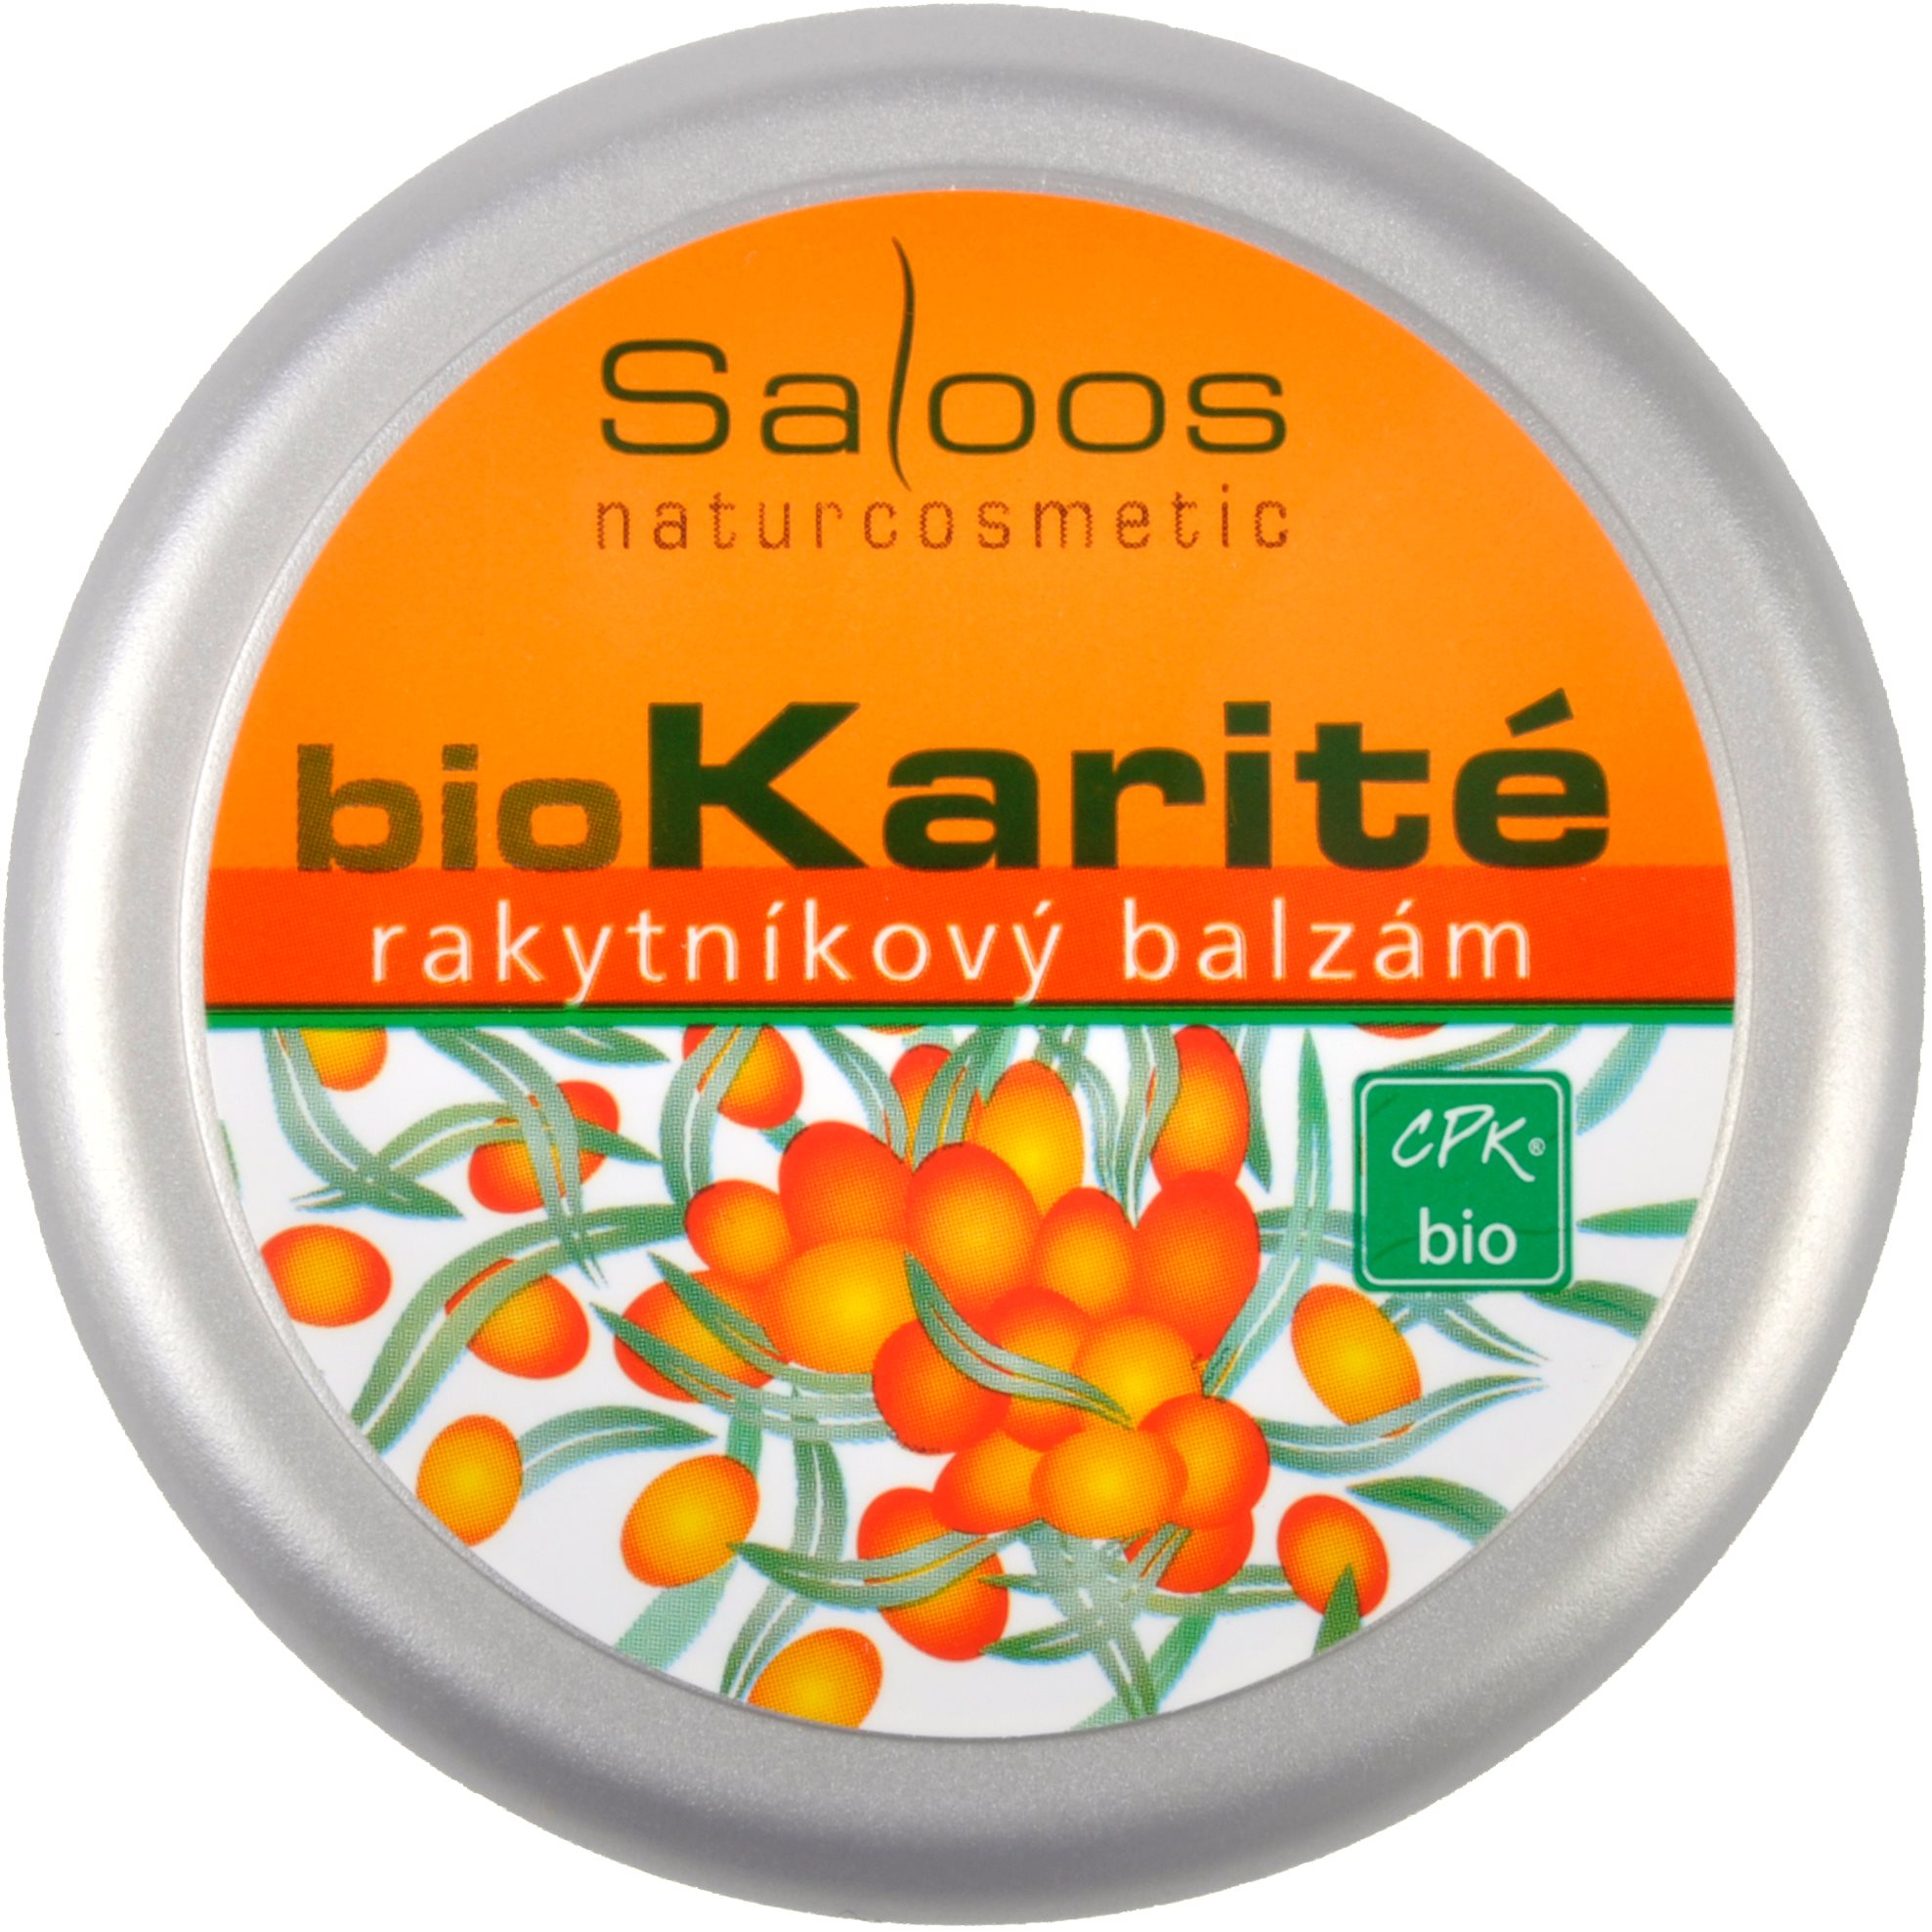 SALOOS Bio karité Homoktövis balzsam 50 ml